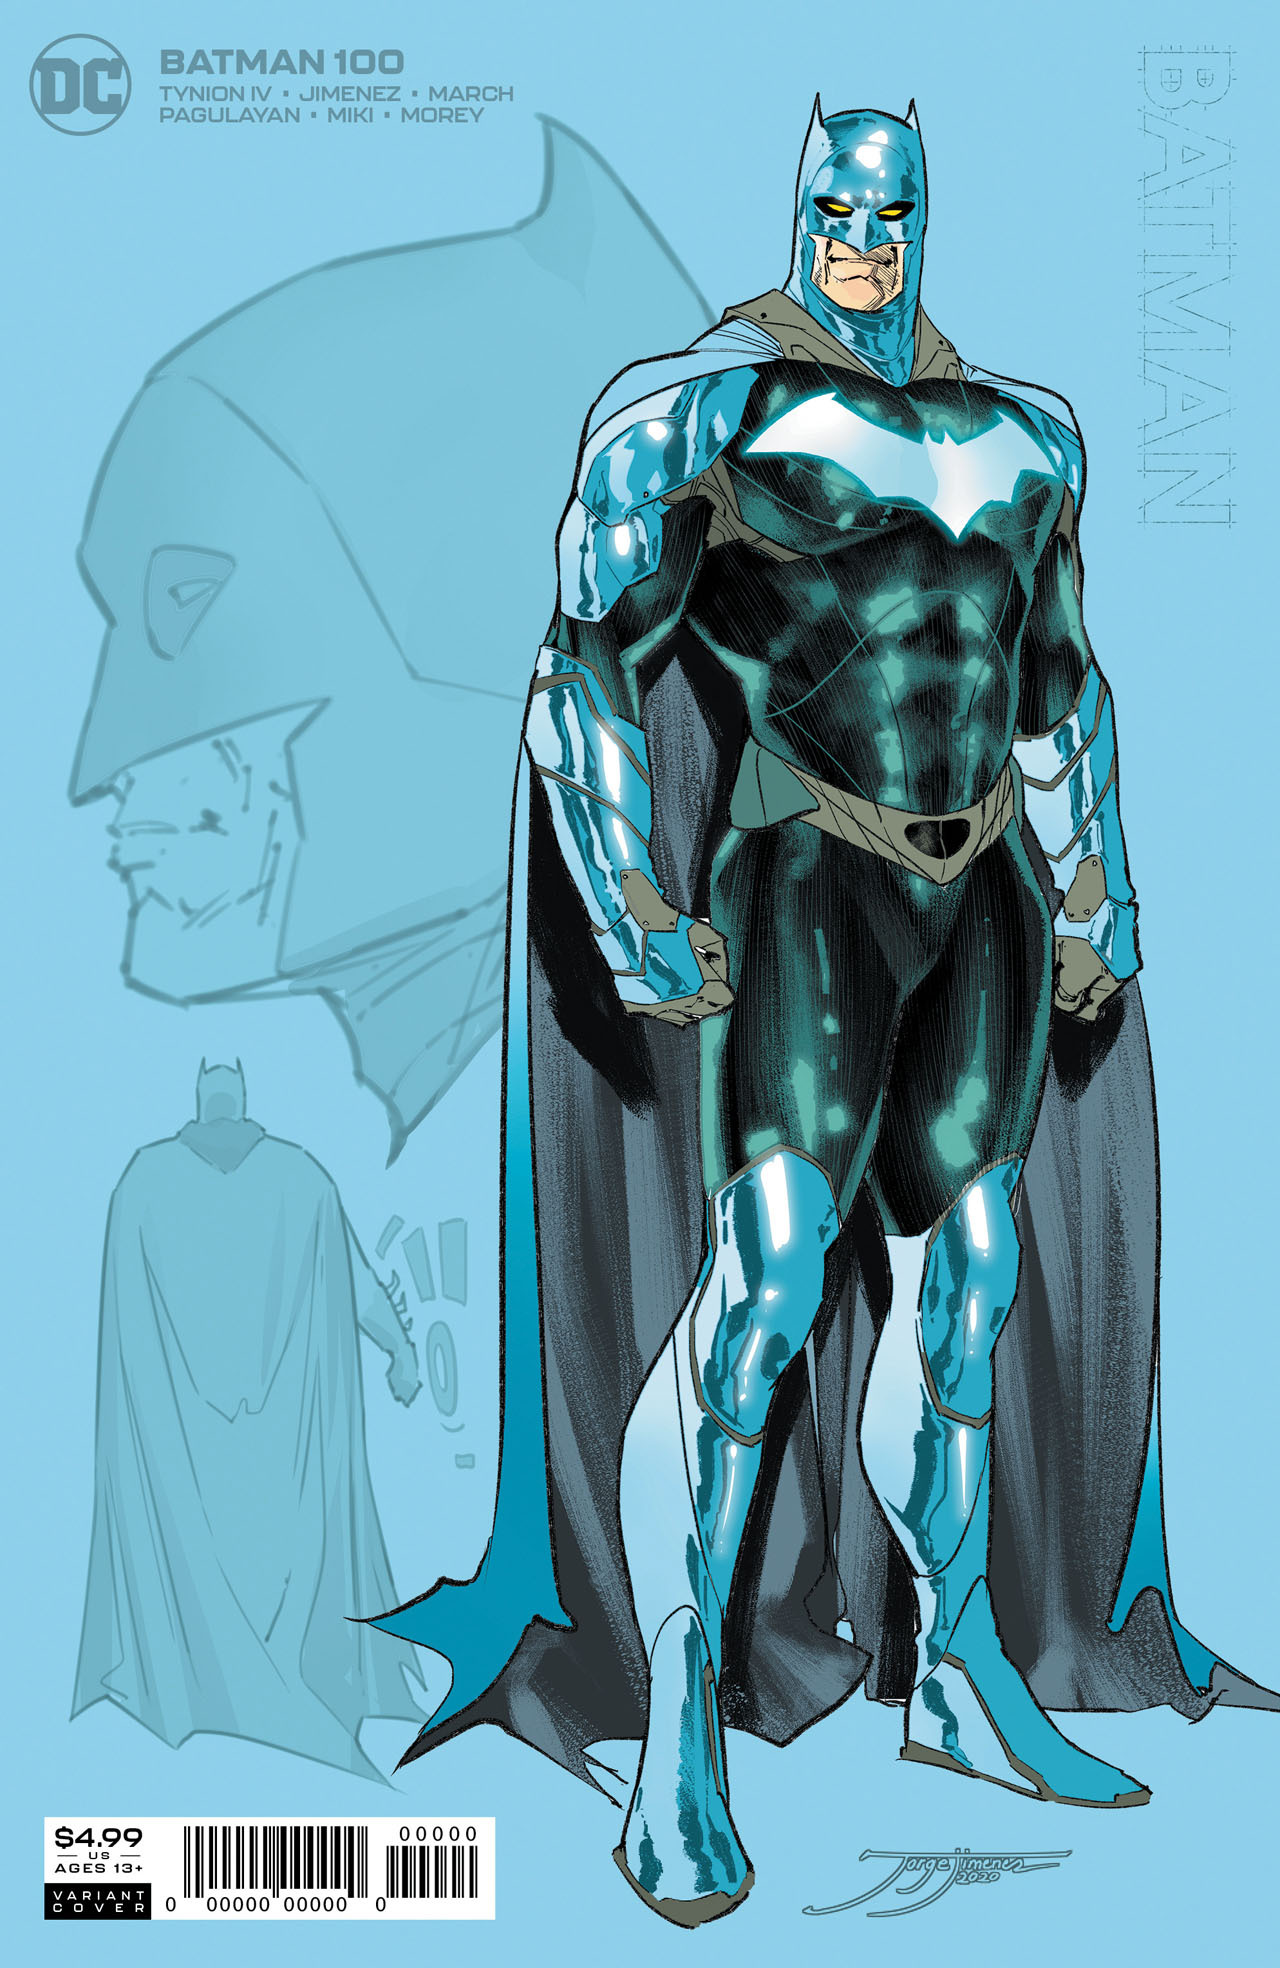 New Batman Costume Design Teased Ahead of Batman #100 | Den of Geek